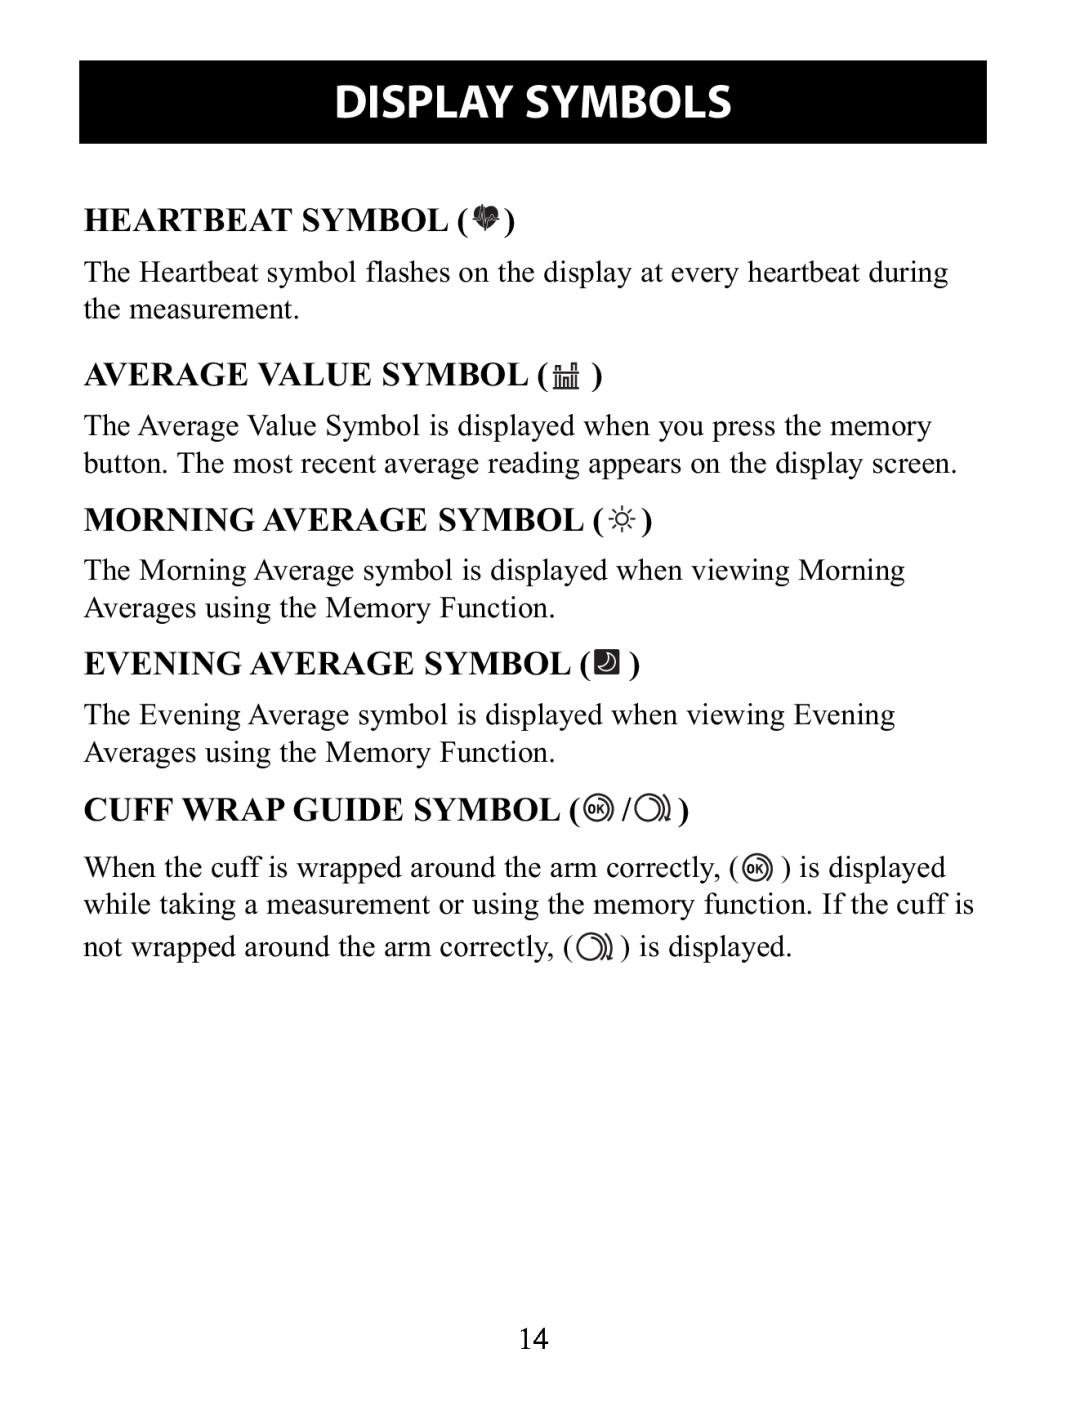 Omron Healthcare BP791IT Heartbeat Symbol, Average Value Symbol, Morning Average Symbol, Evening Average Symbol 